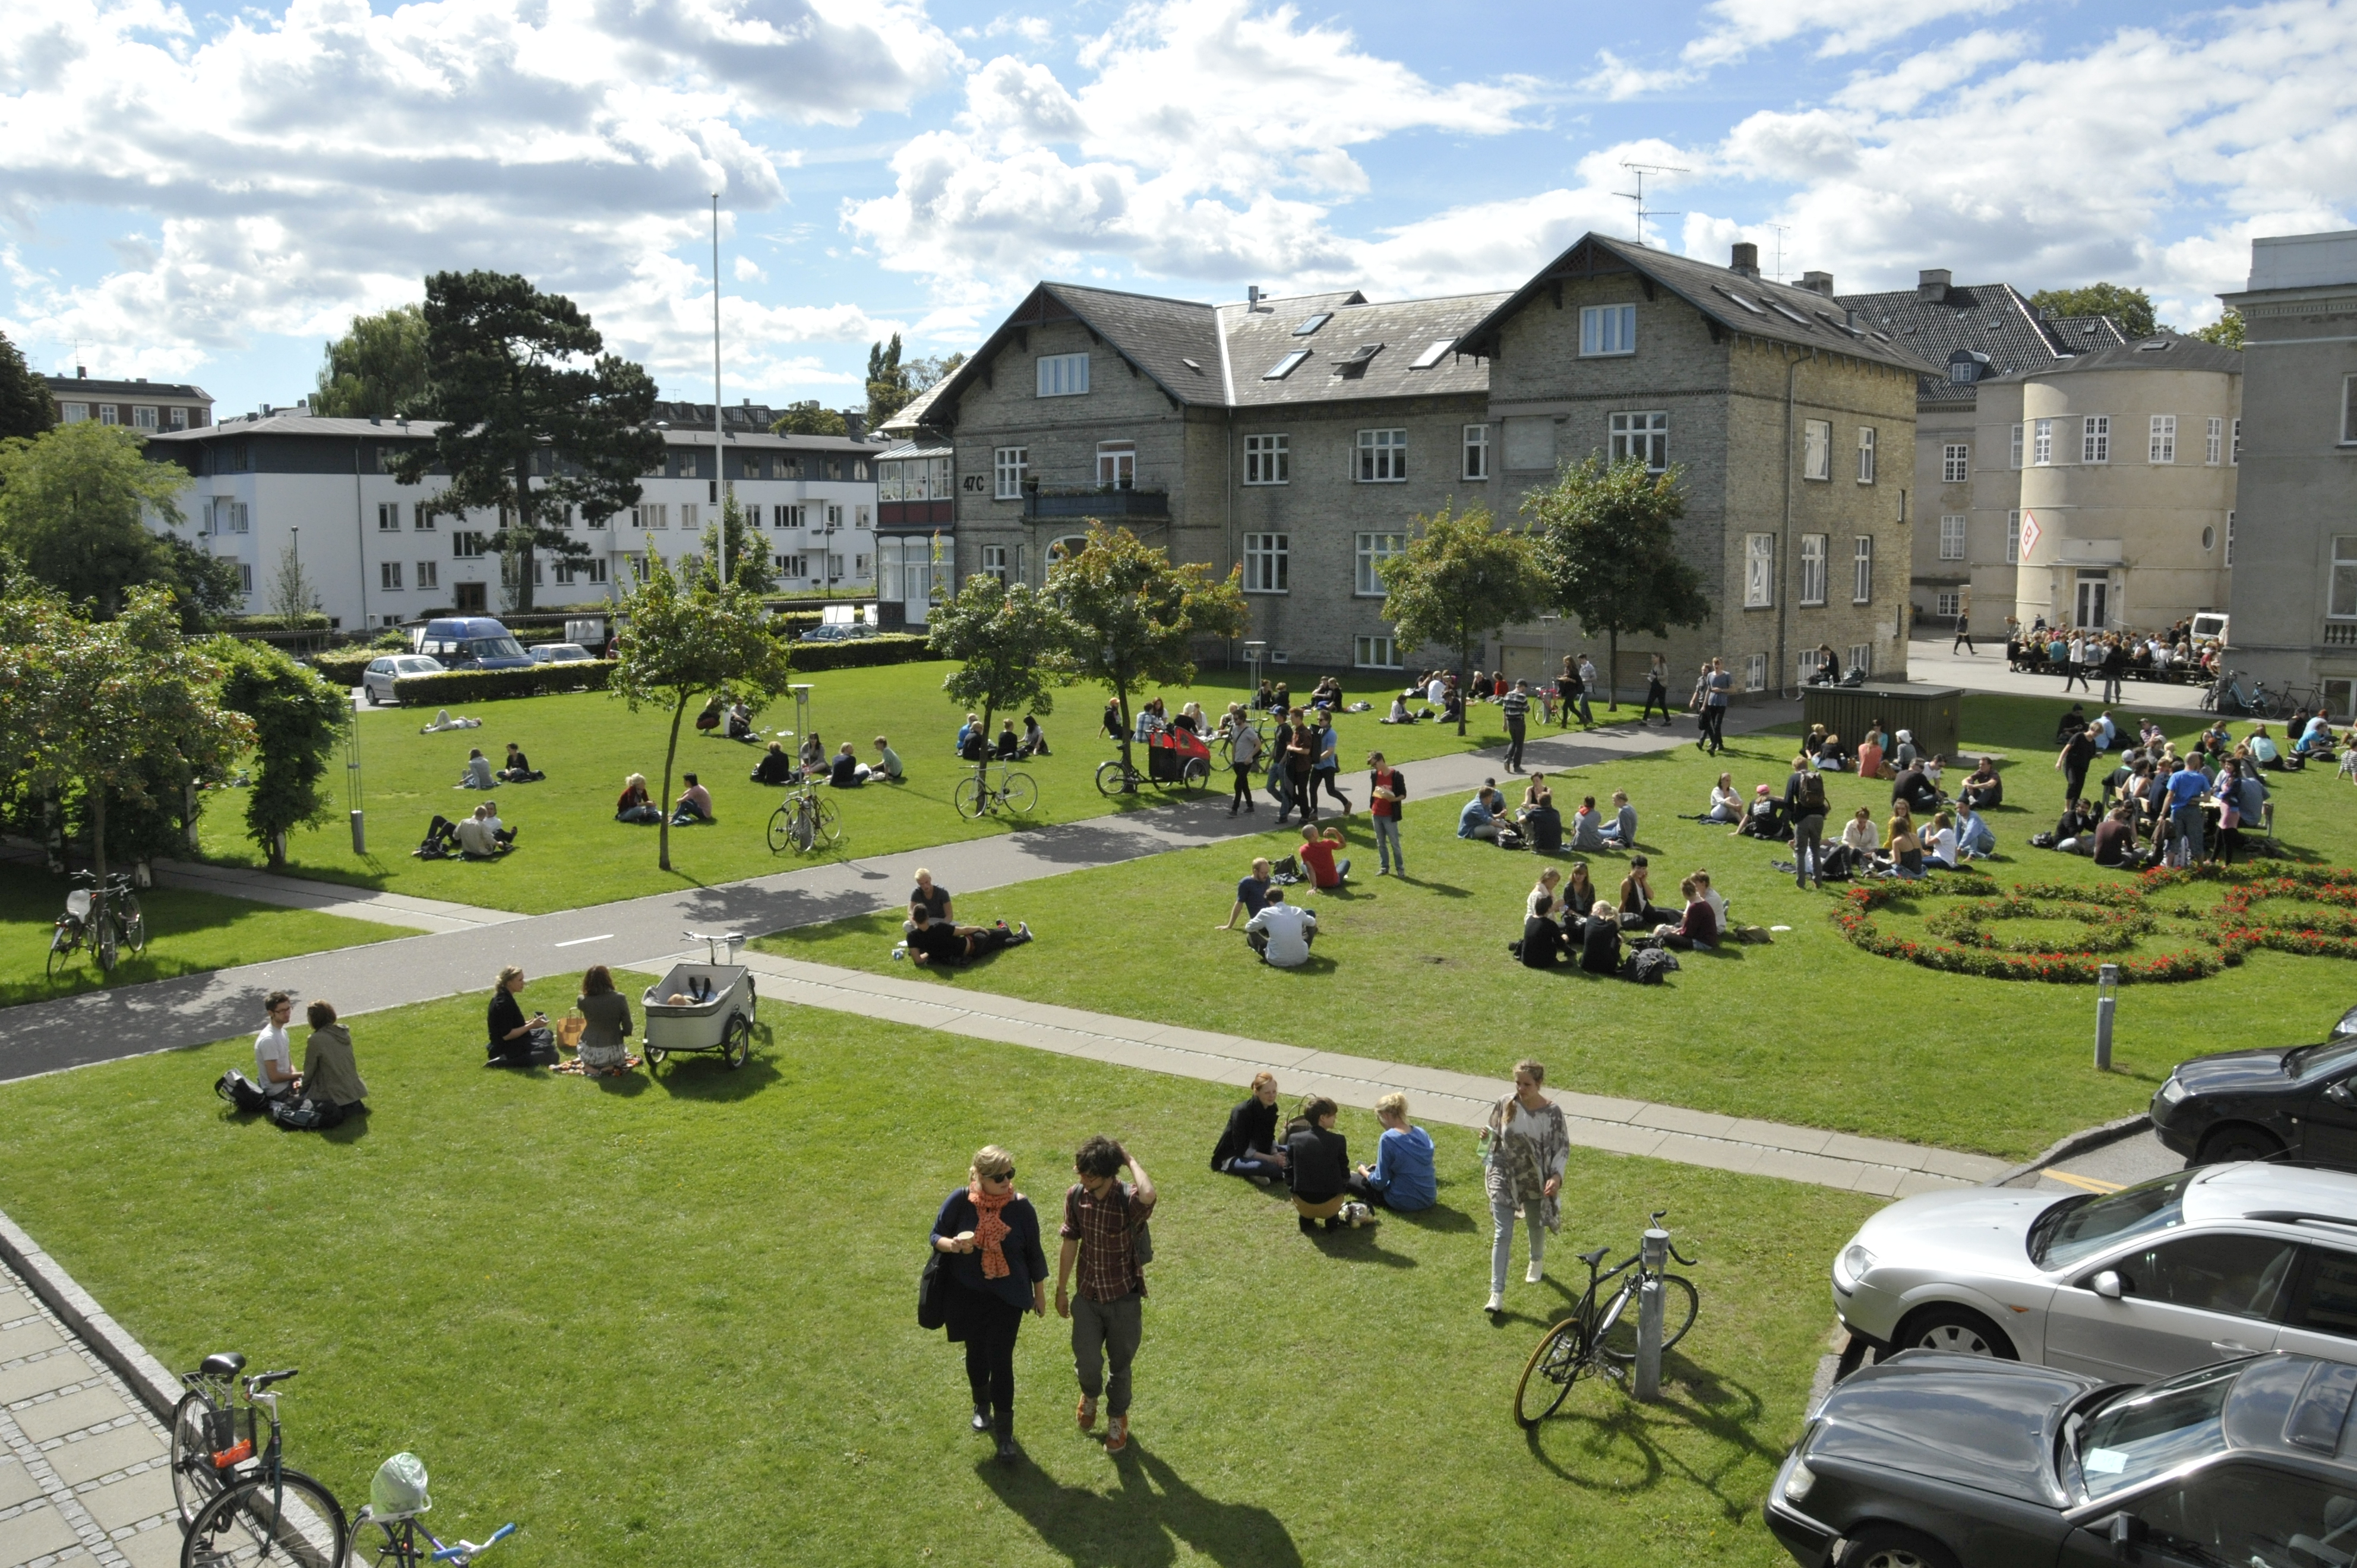 File:Campus - The Danish Design School.jpg - Wikipedia, the free ...